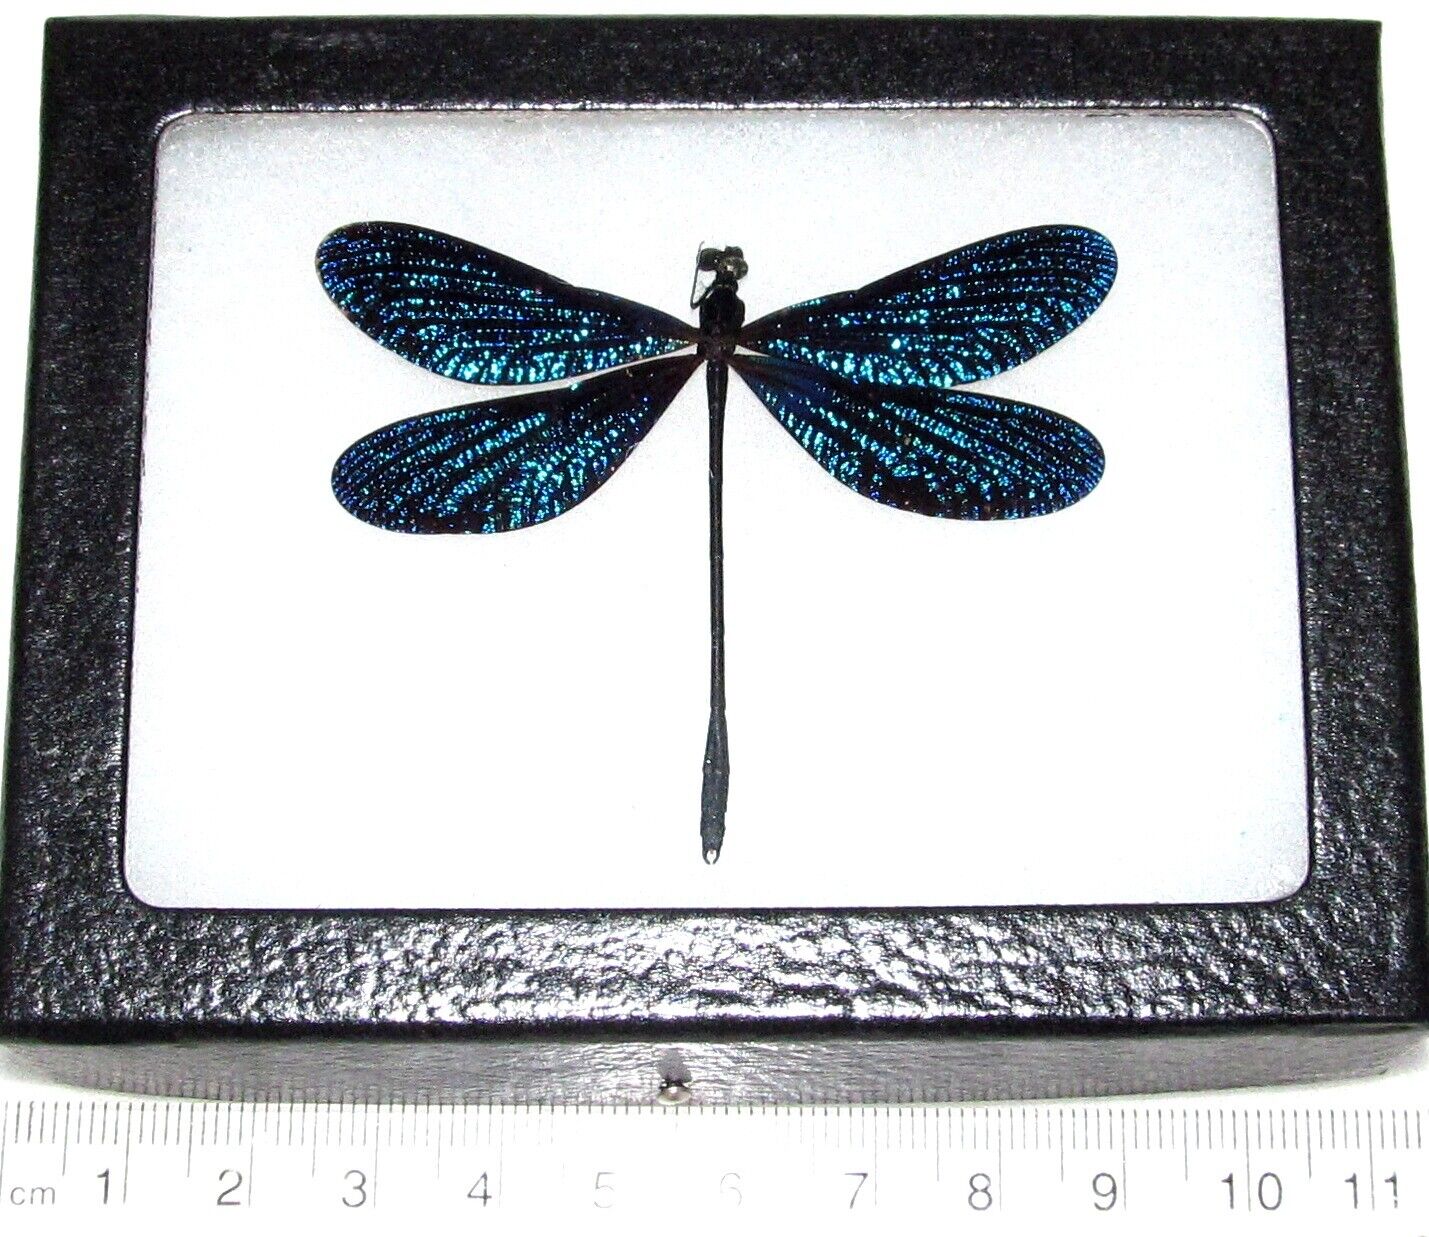 Vestalis melania blue dragonfly damselfly Philippines framed